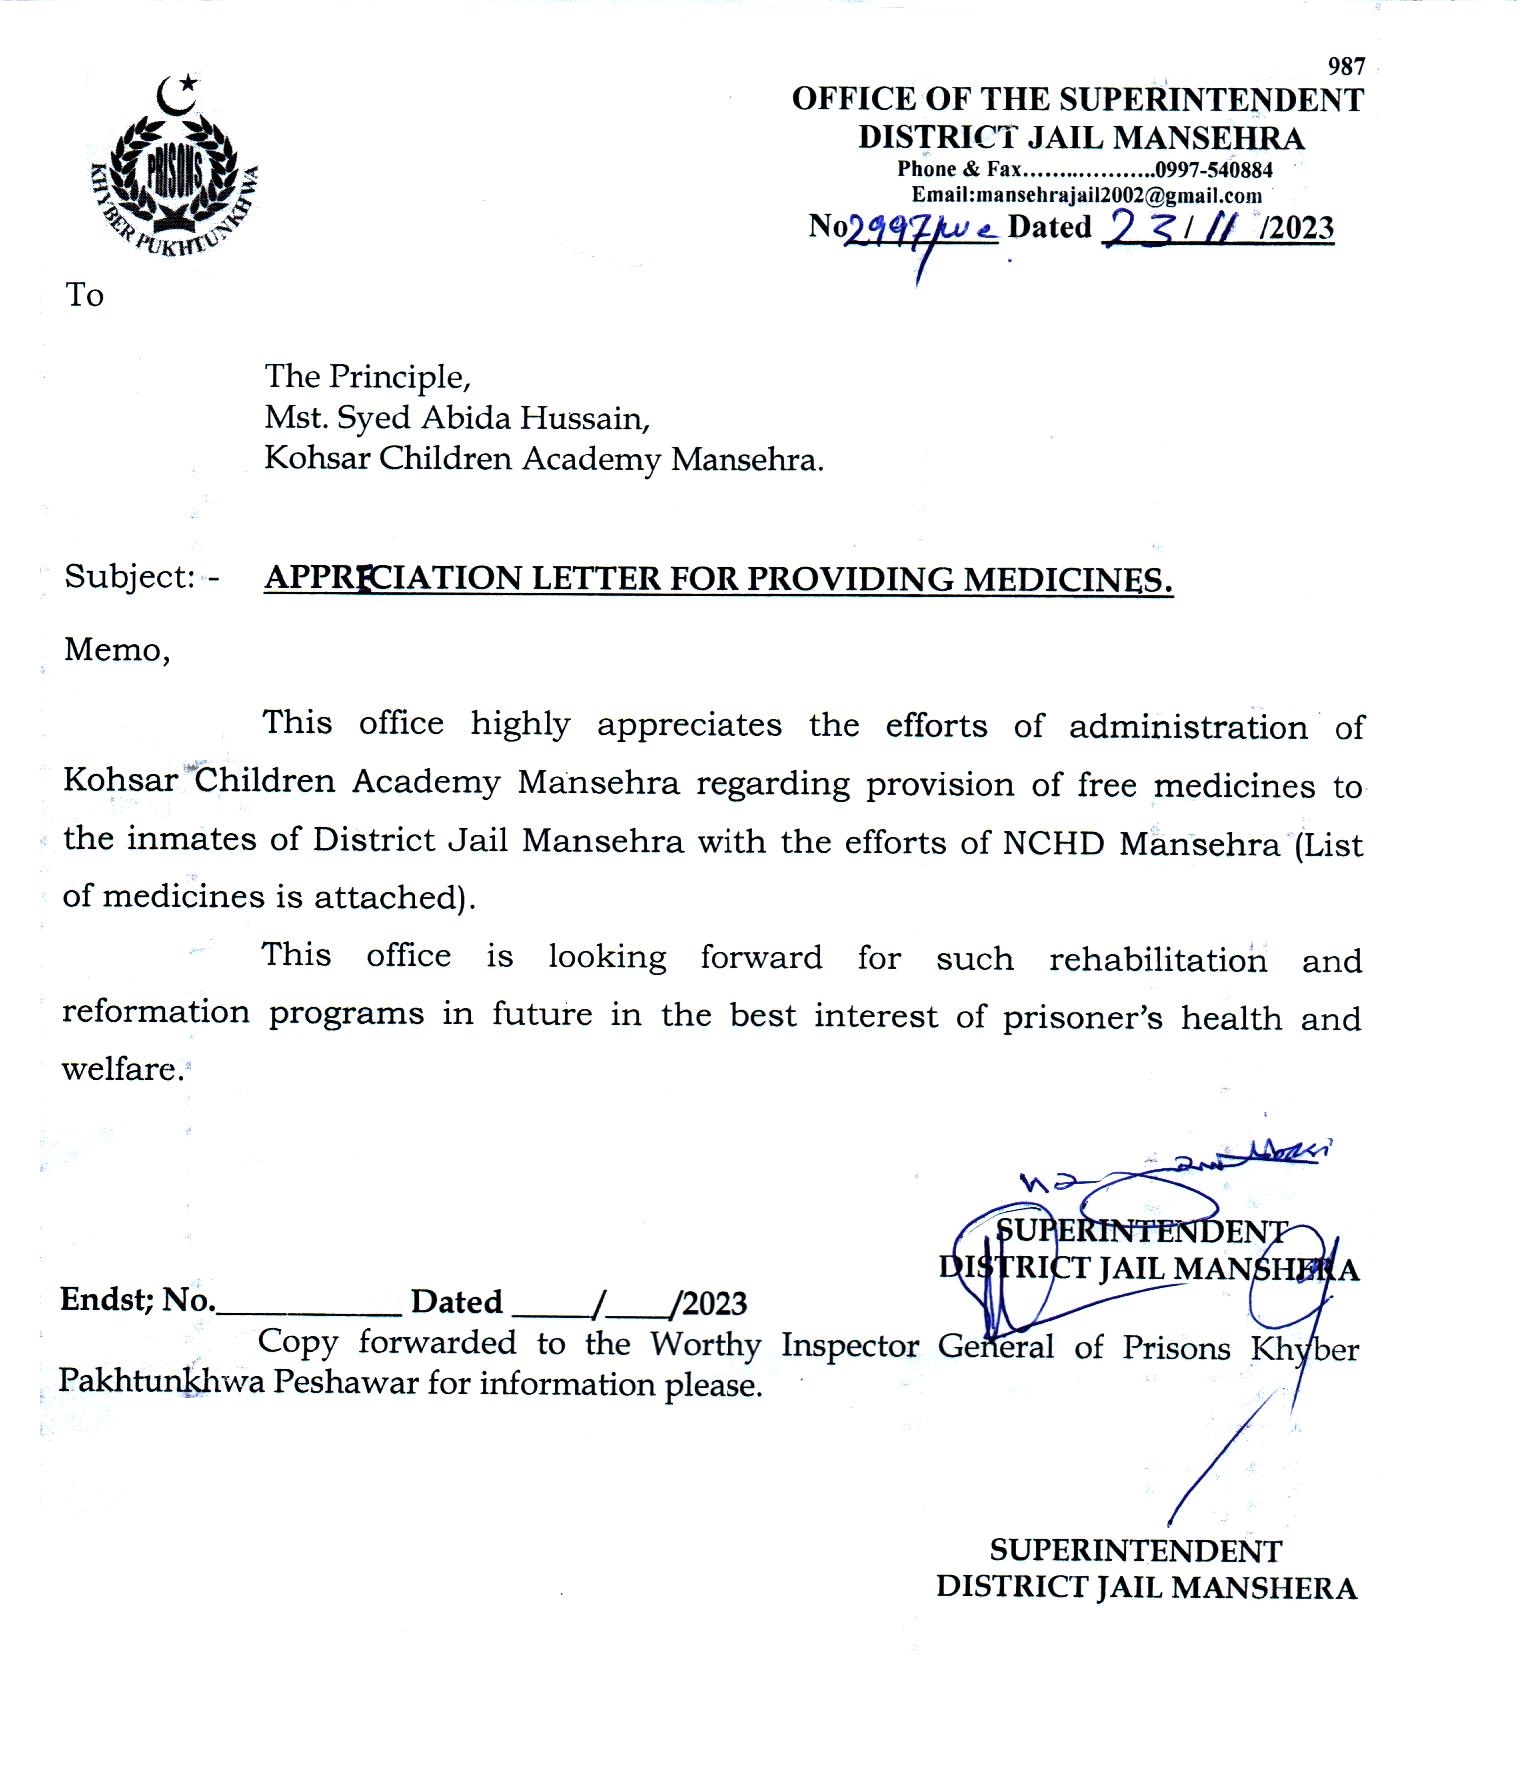 Appriciation Letter for Providing Medicines